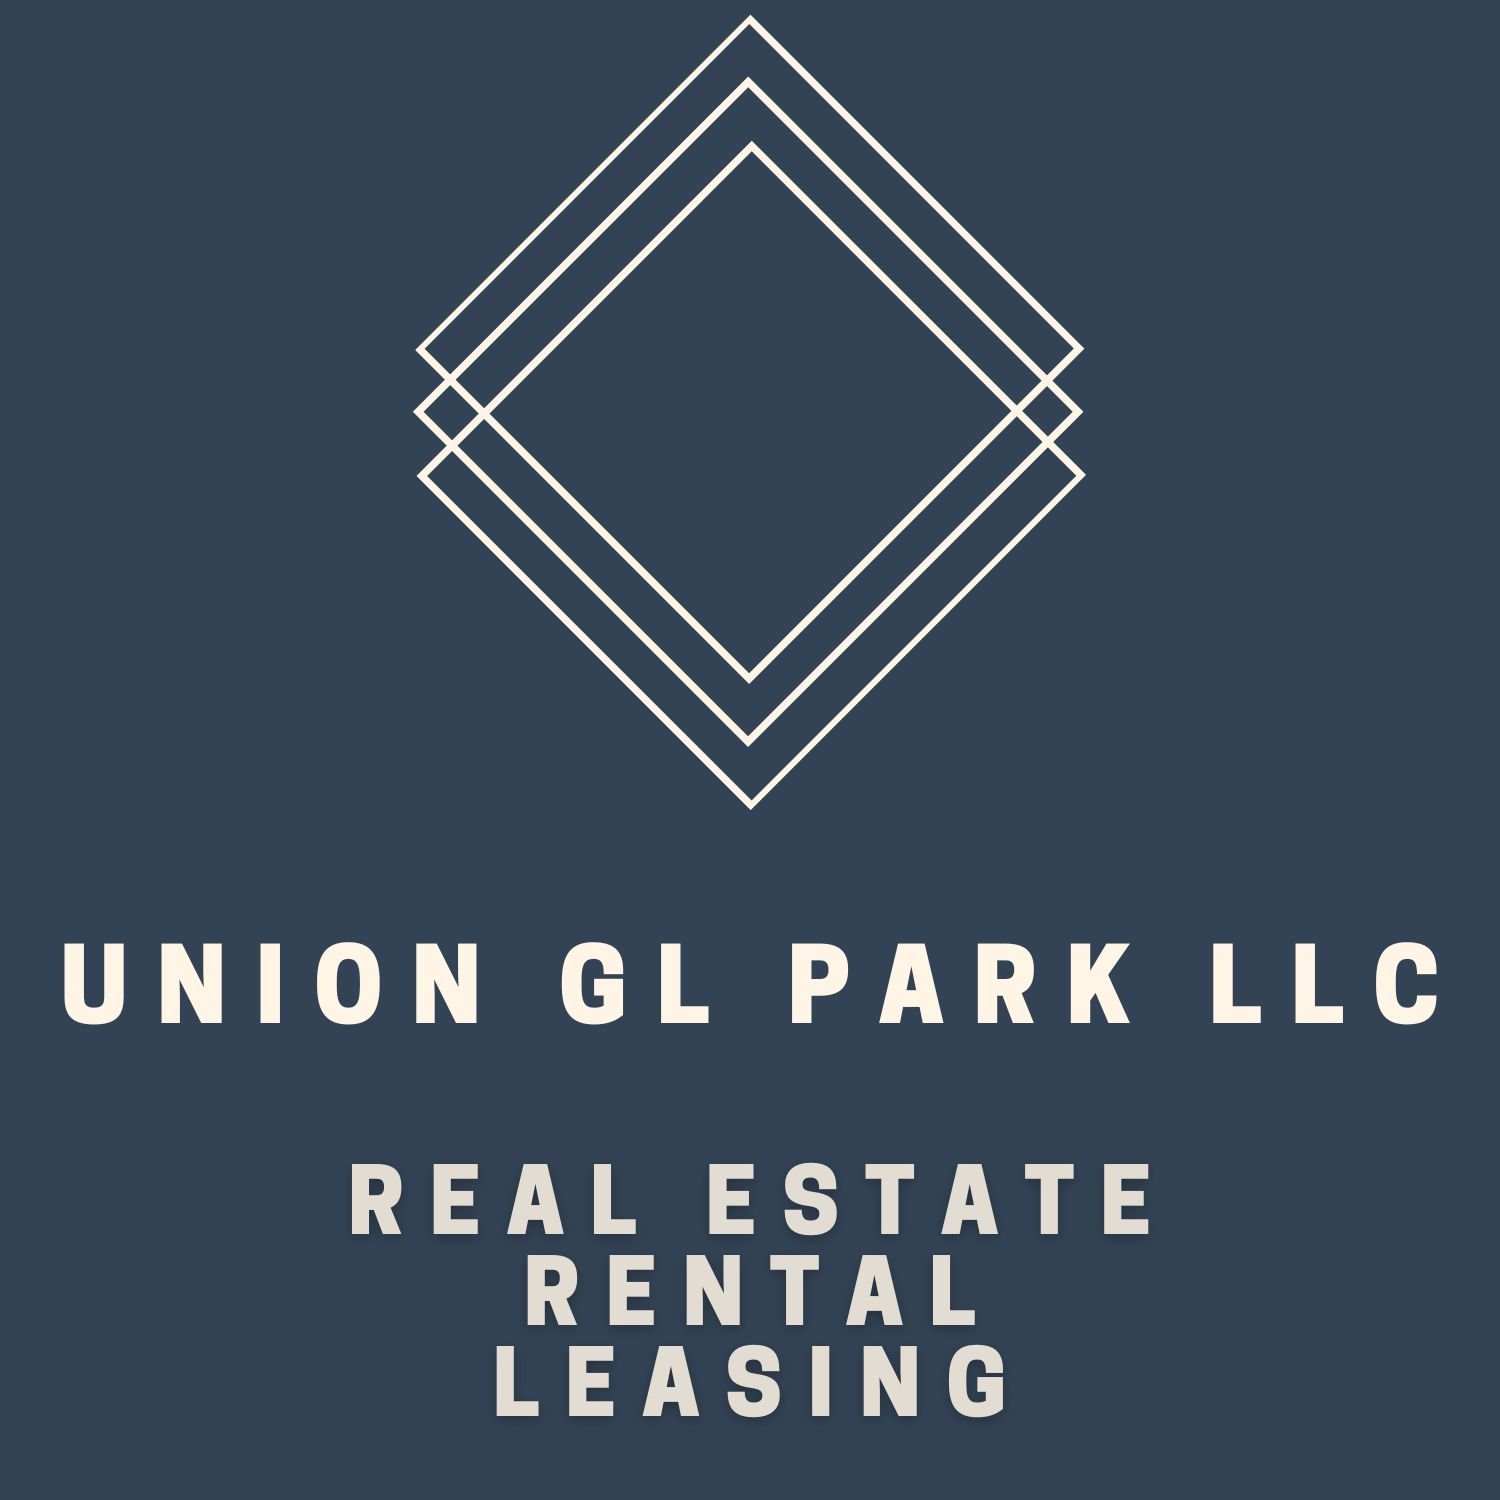  Union GL Park LLC